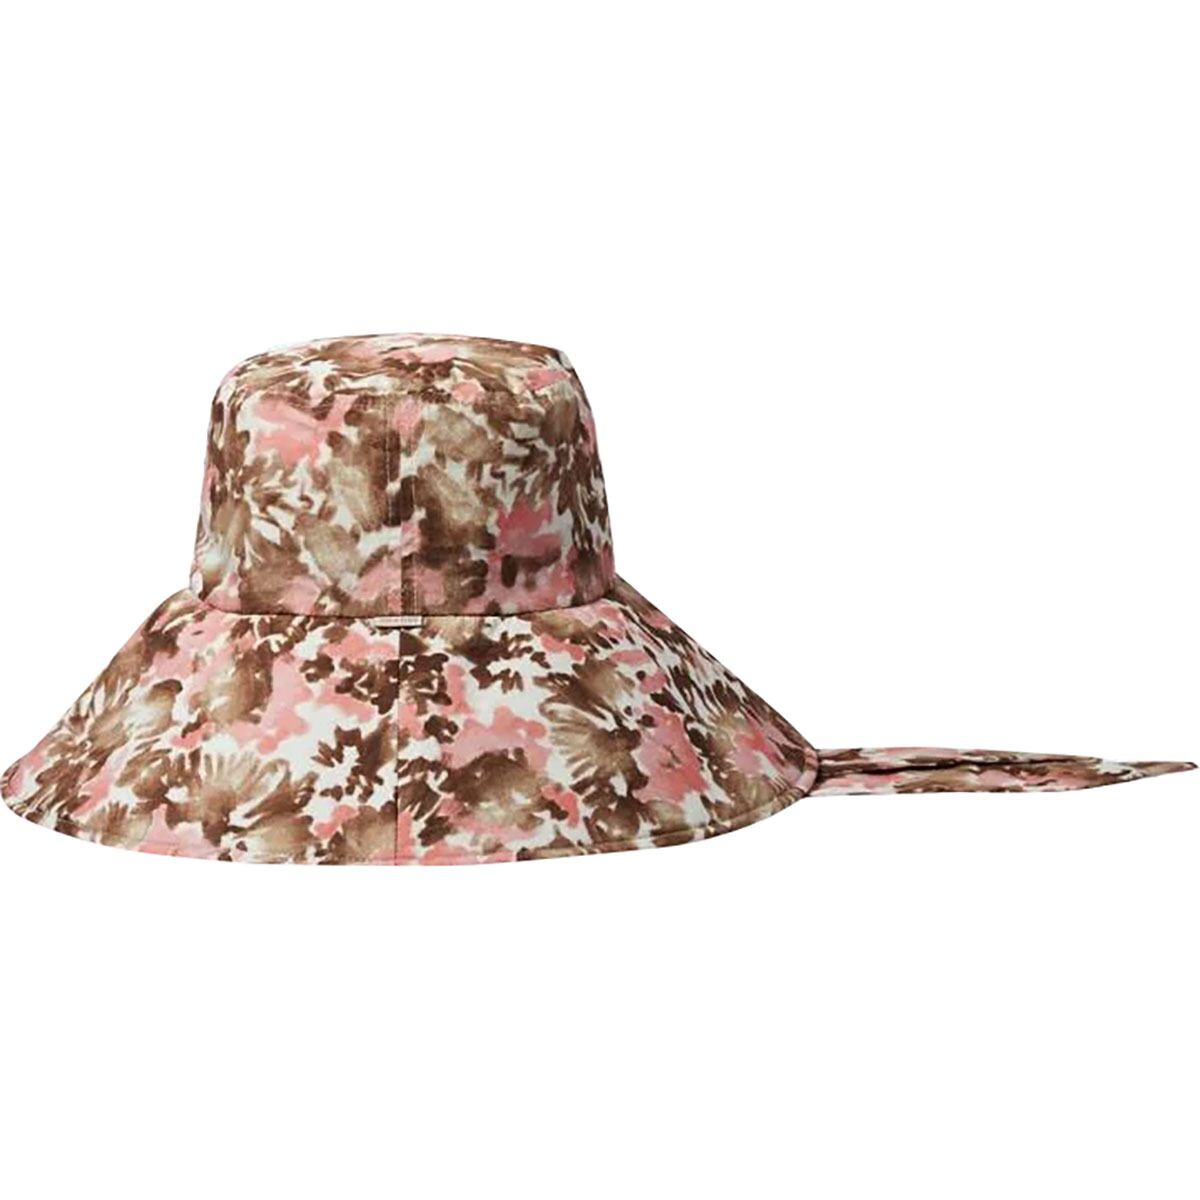 Brixton Jasper Packable Bucket Hat in Pink Nectar Size M/L